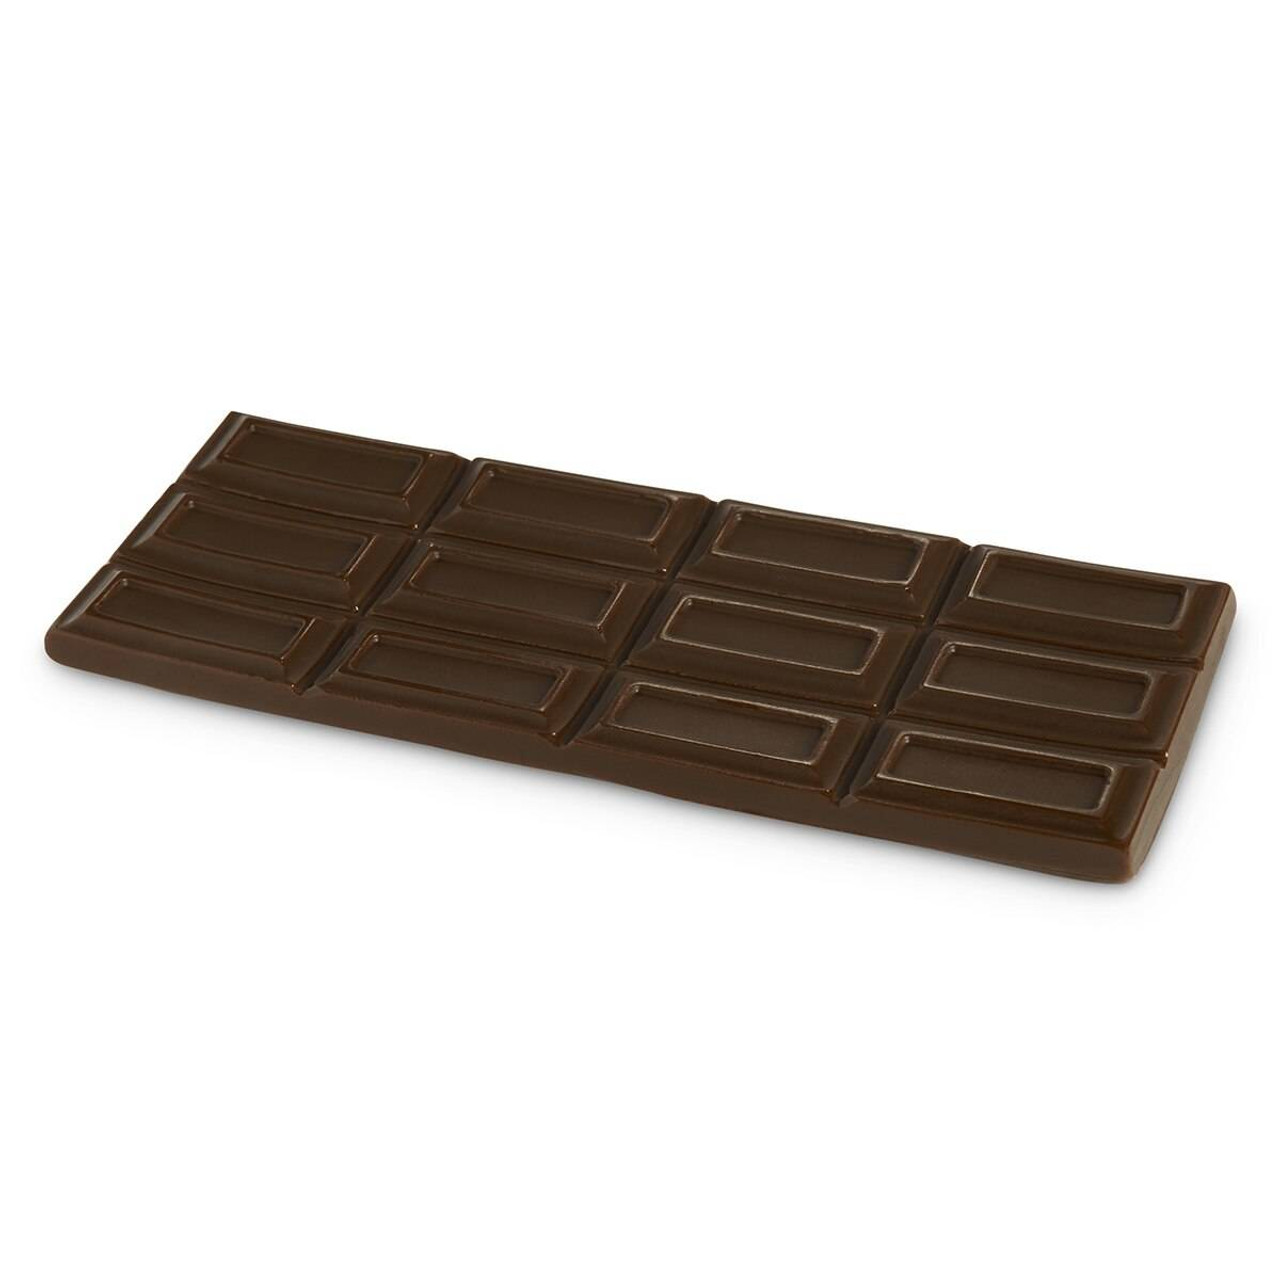 Small Chocolate Bar, 2 x 5, 1-1/2 oz.